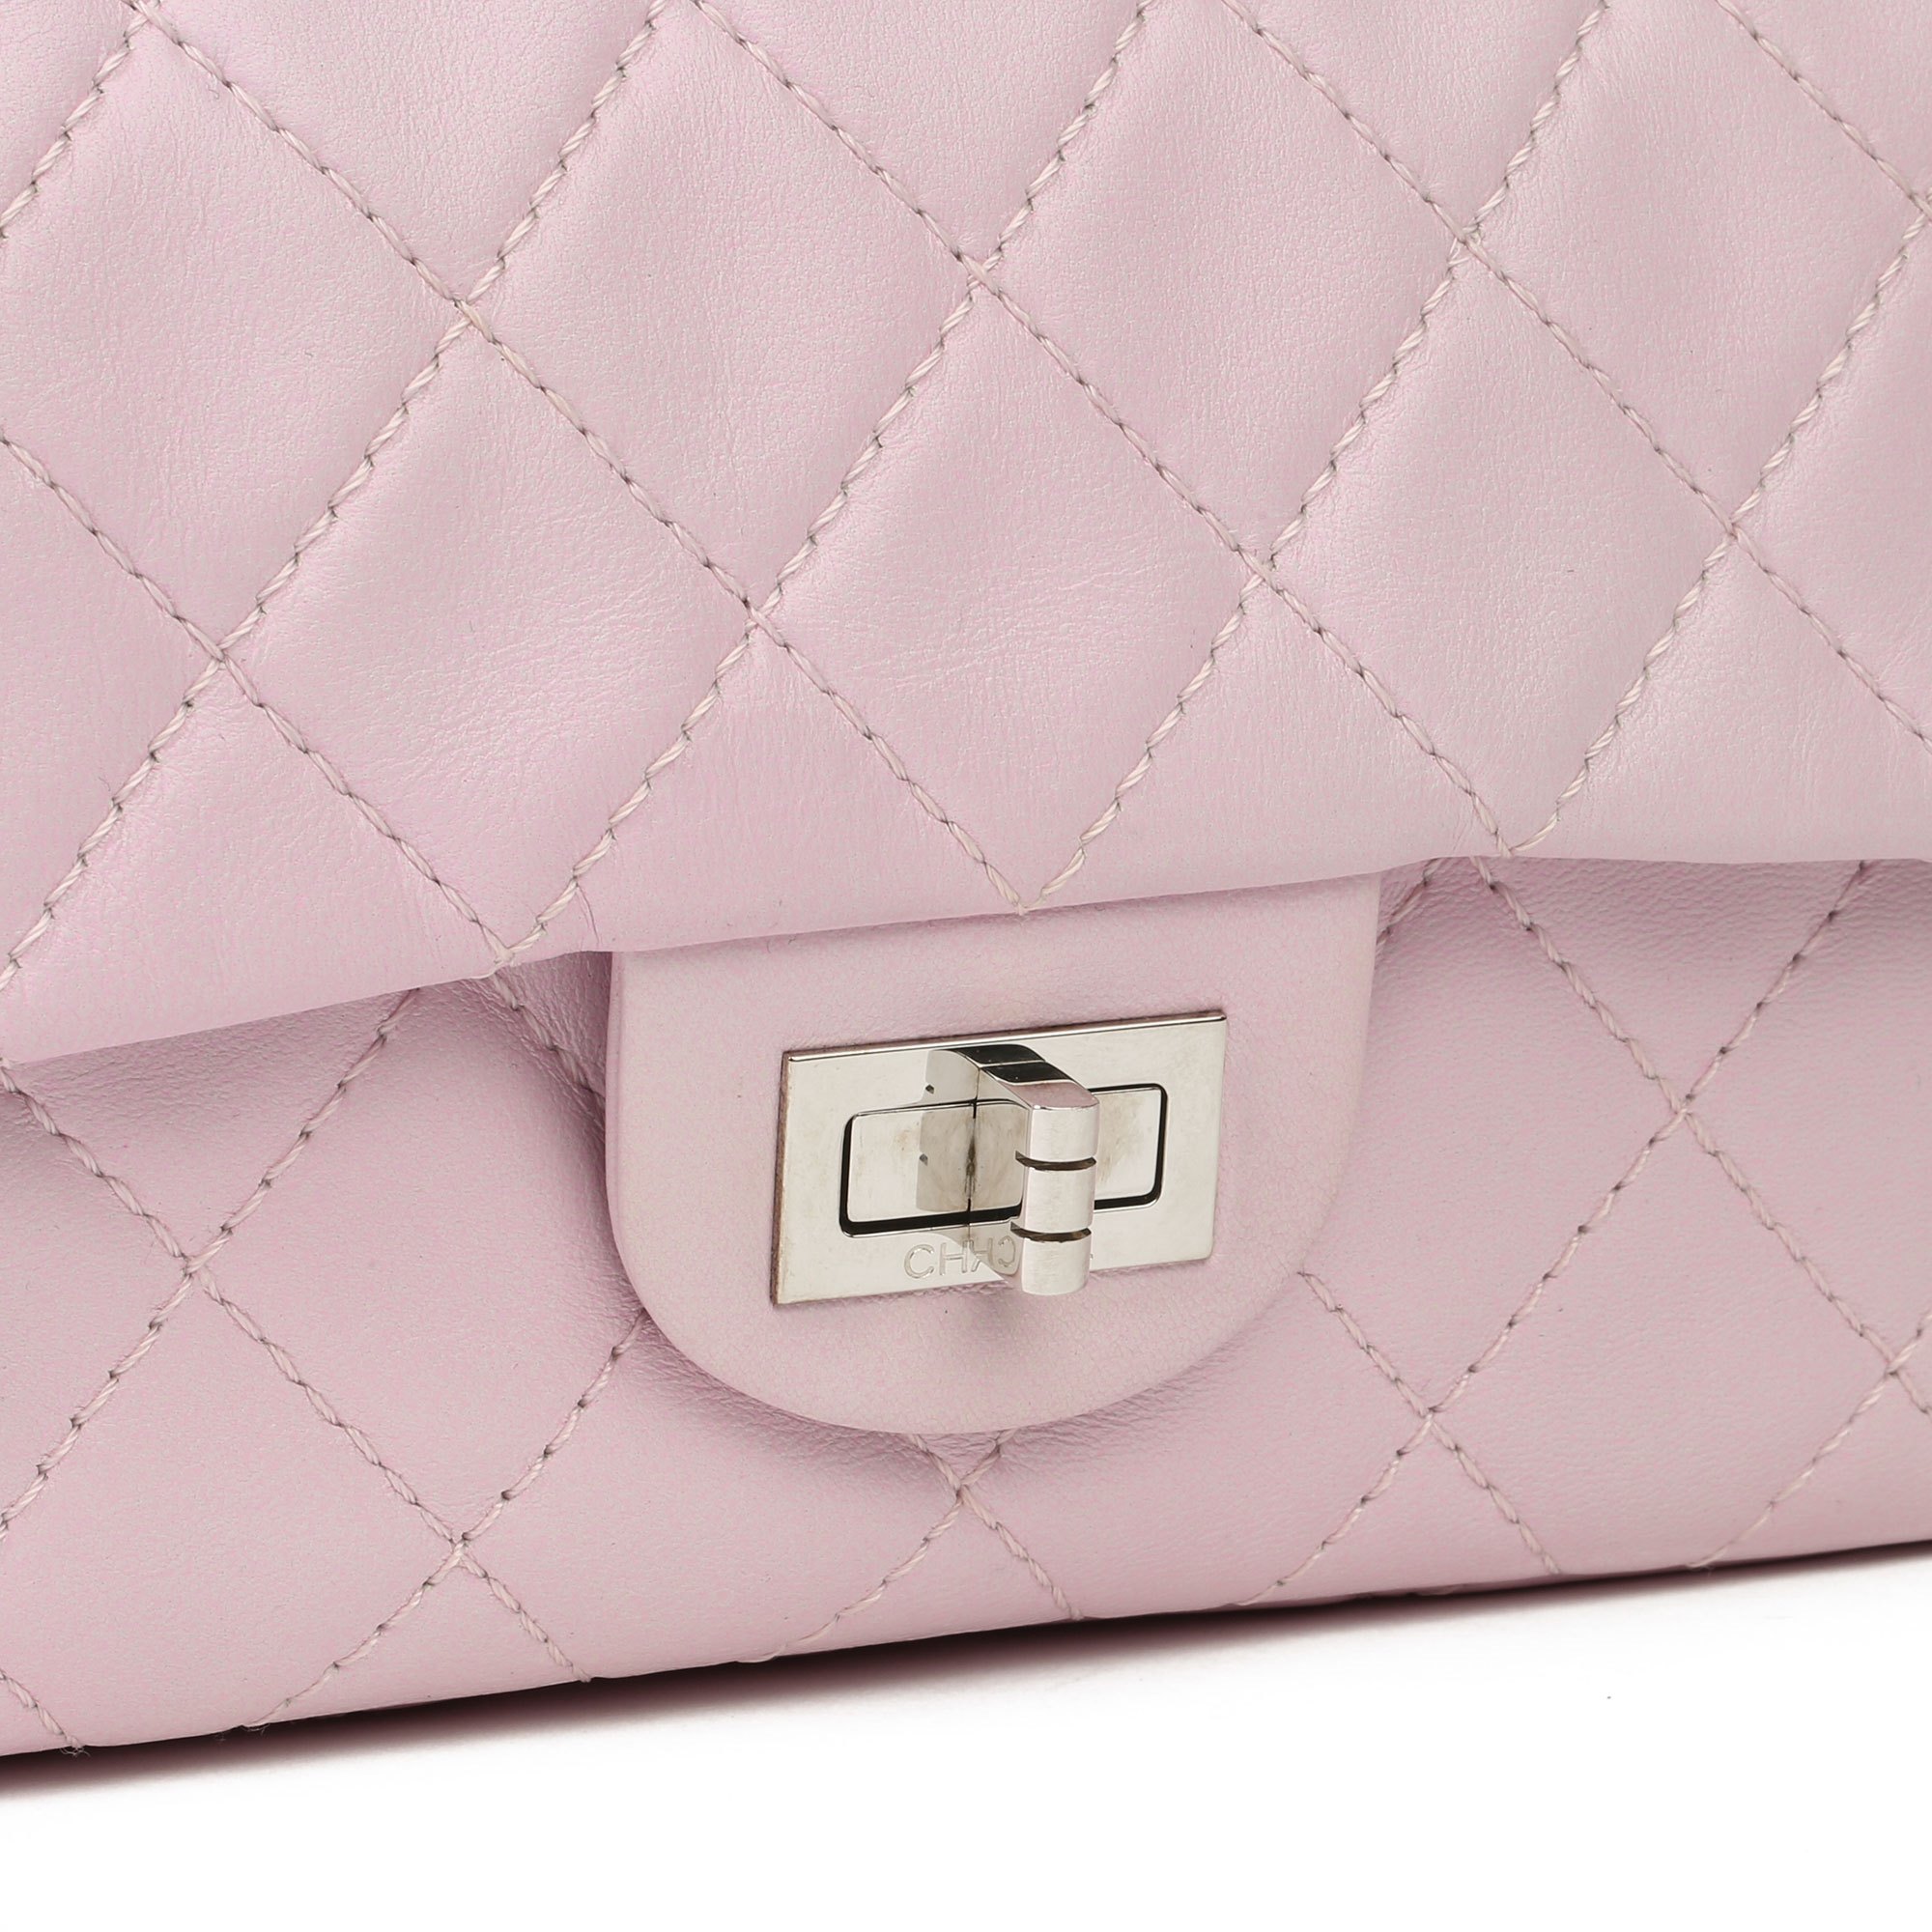 Chanel Sakura Pink Quilted Lambskin 2.55 Reissue 226 Flap Bag